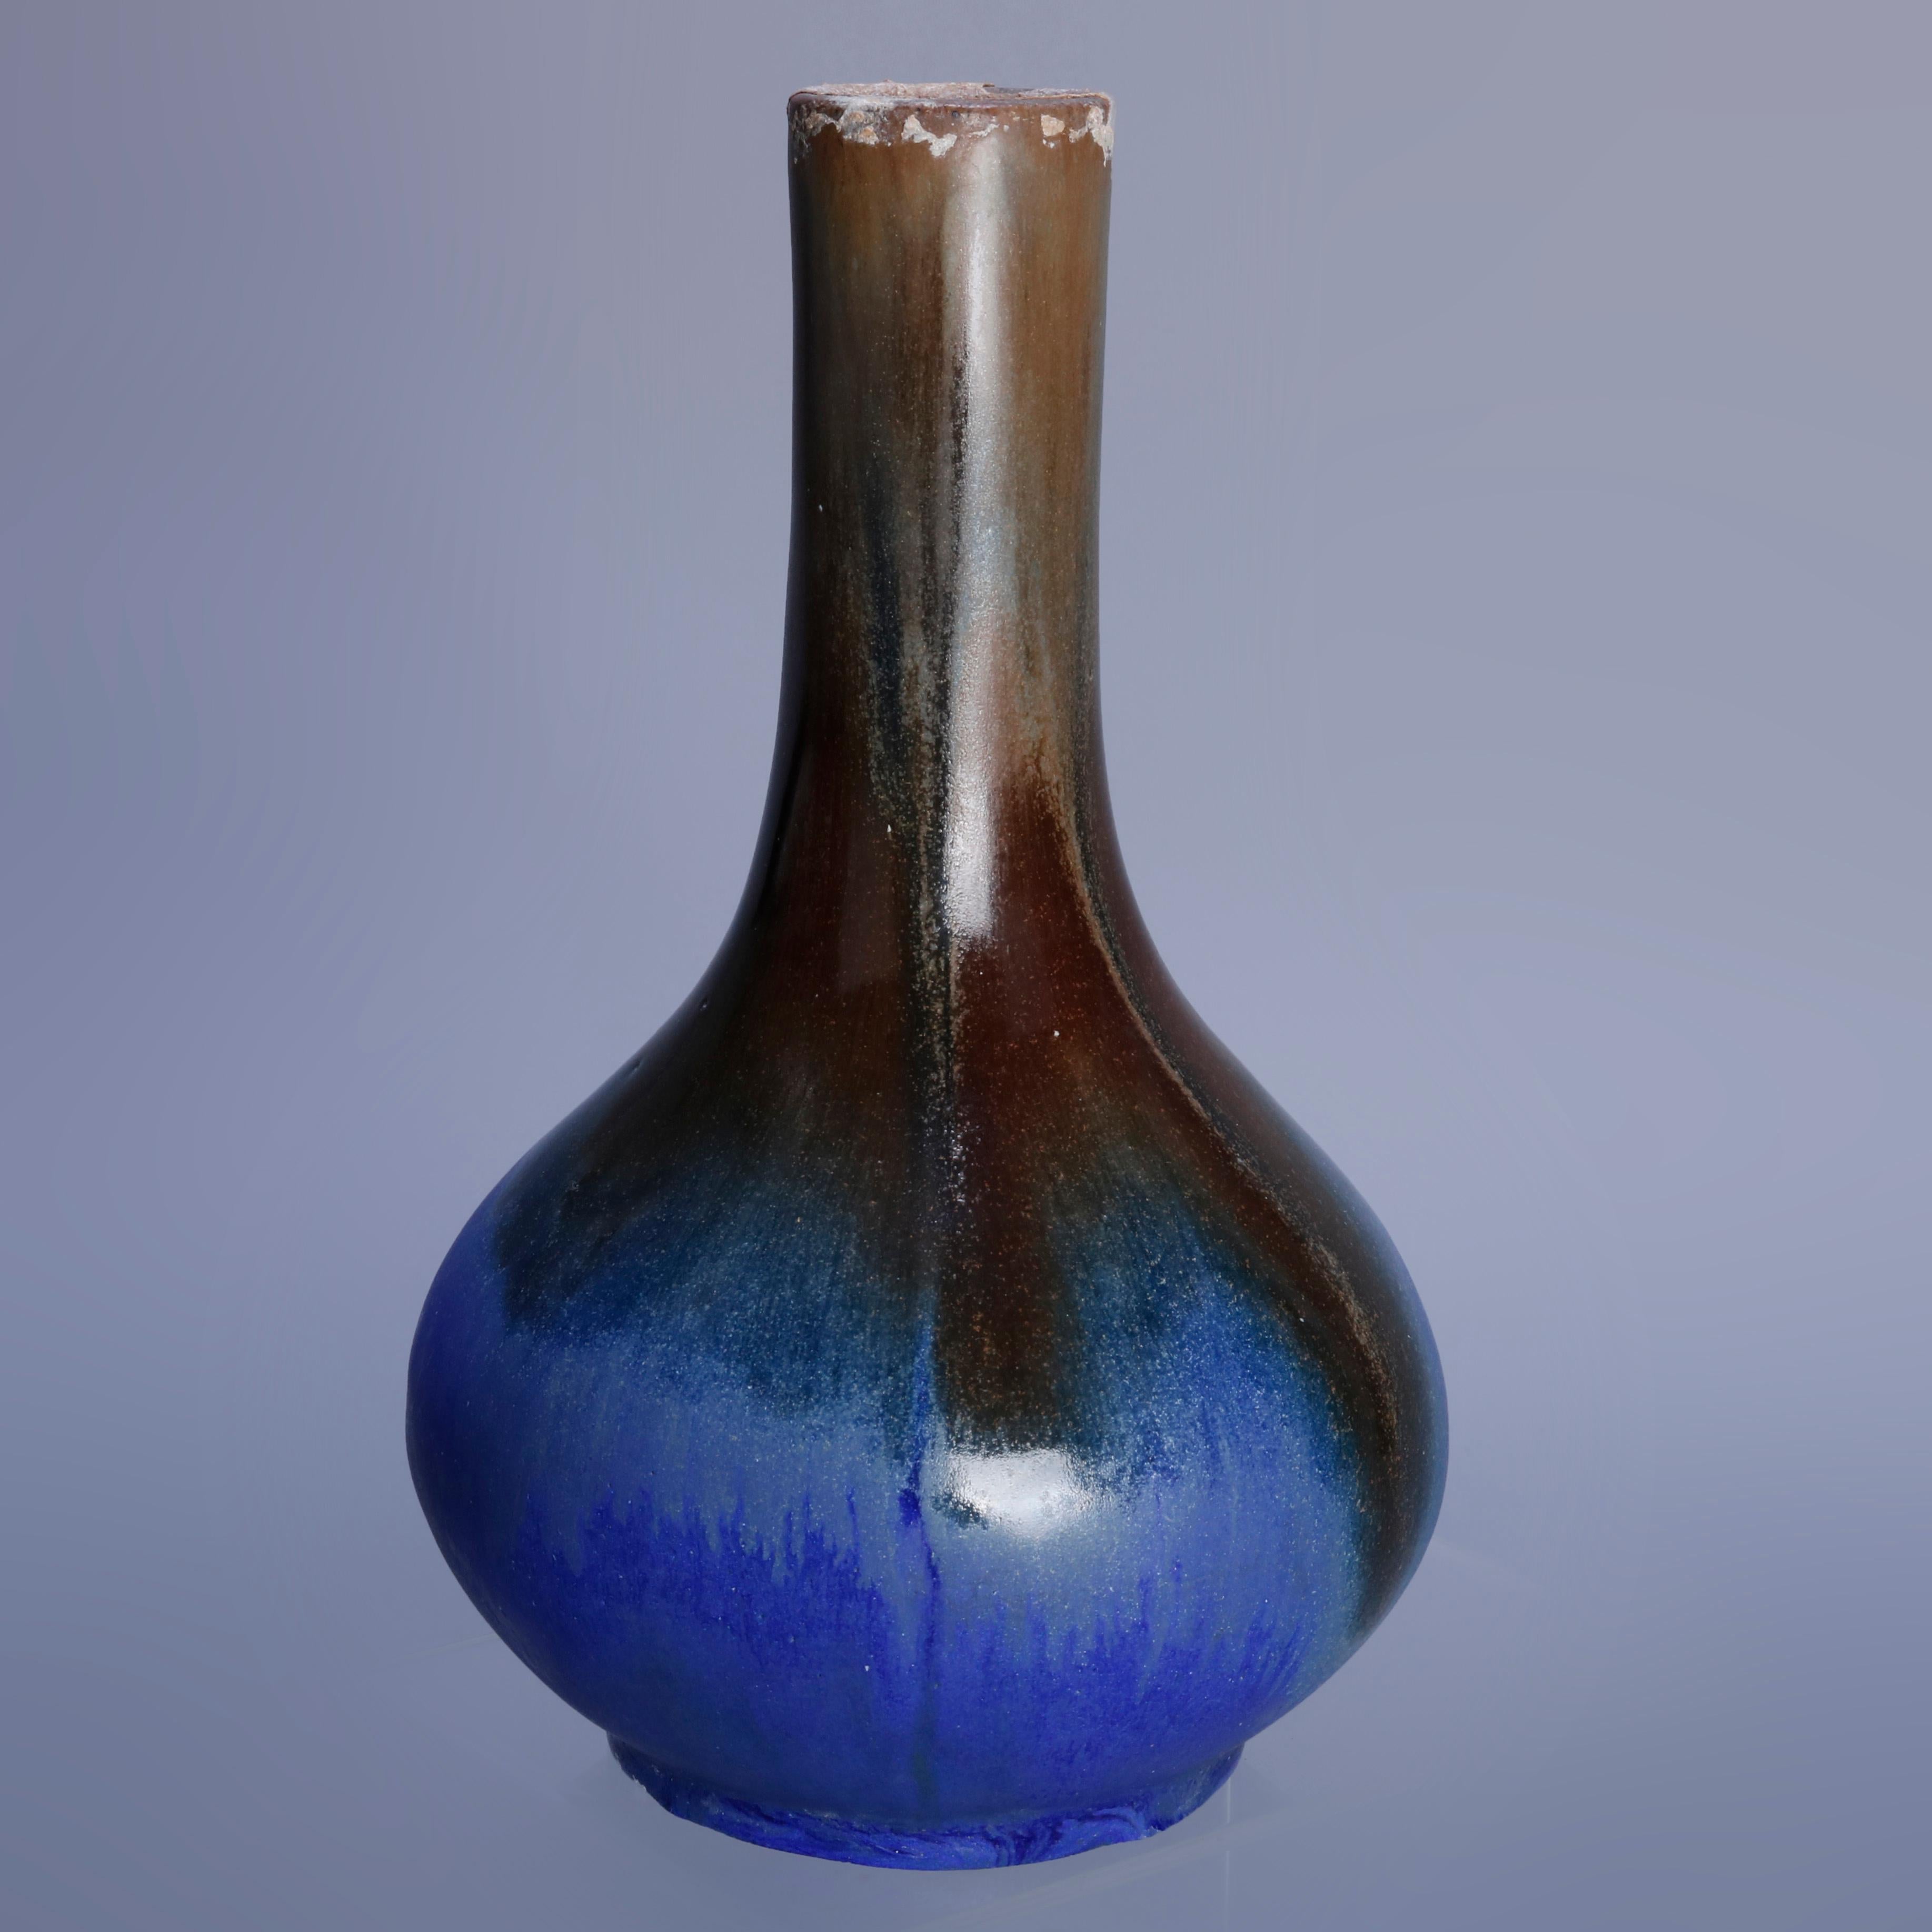 Arts and Crafts Antique Arts & Crafts Art Pottery Drip Glaze Bottle Vase by Fulper, circa 1920